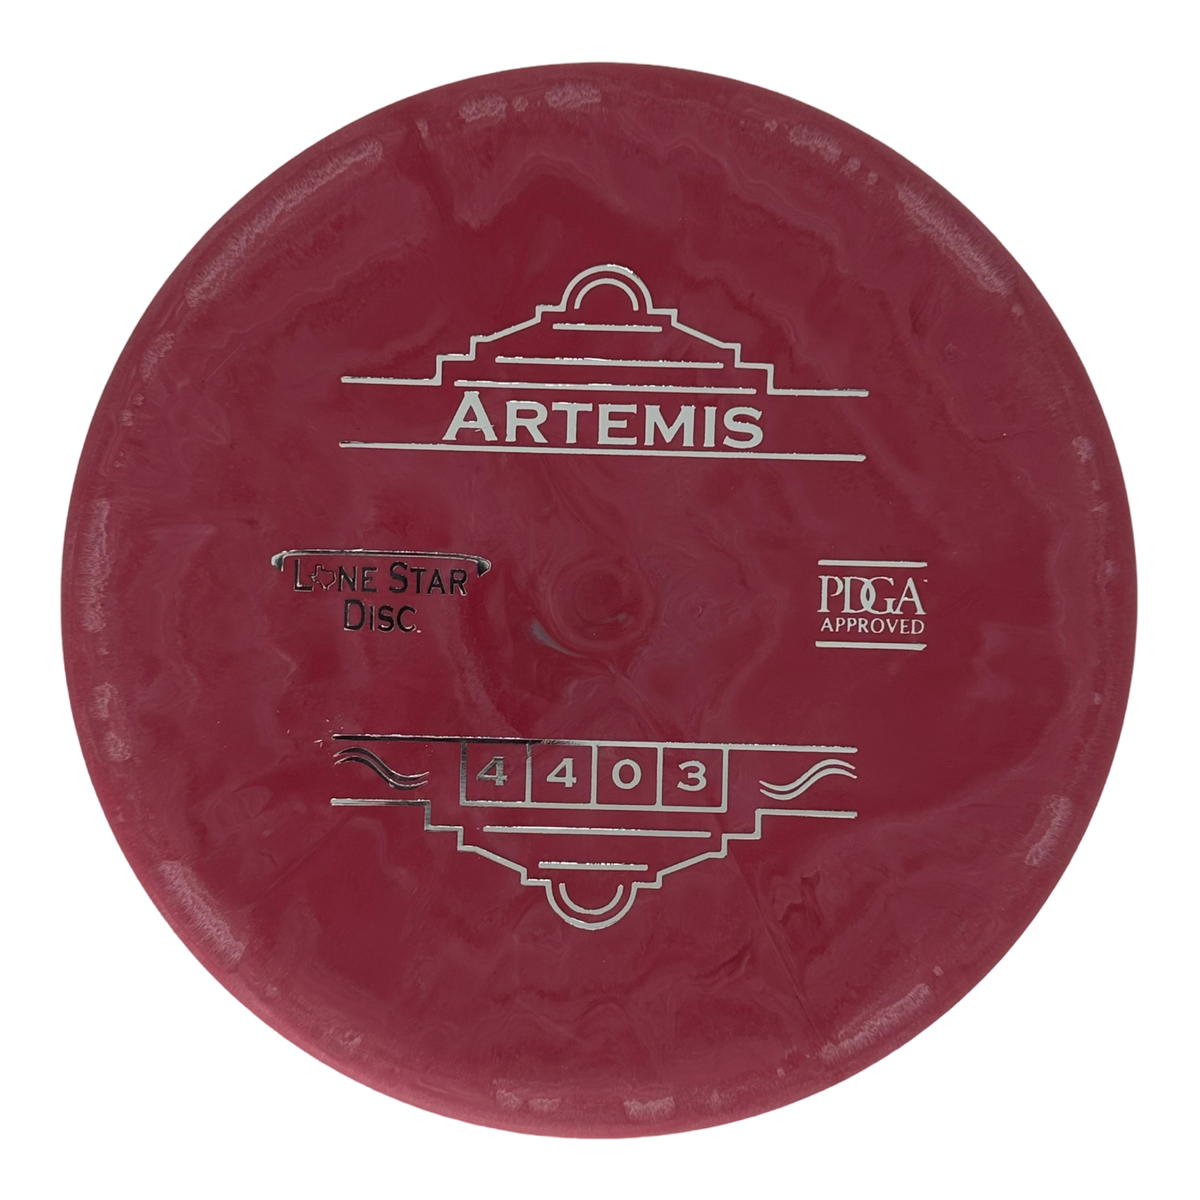 Lone Star Disc Delta 2 Artemis